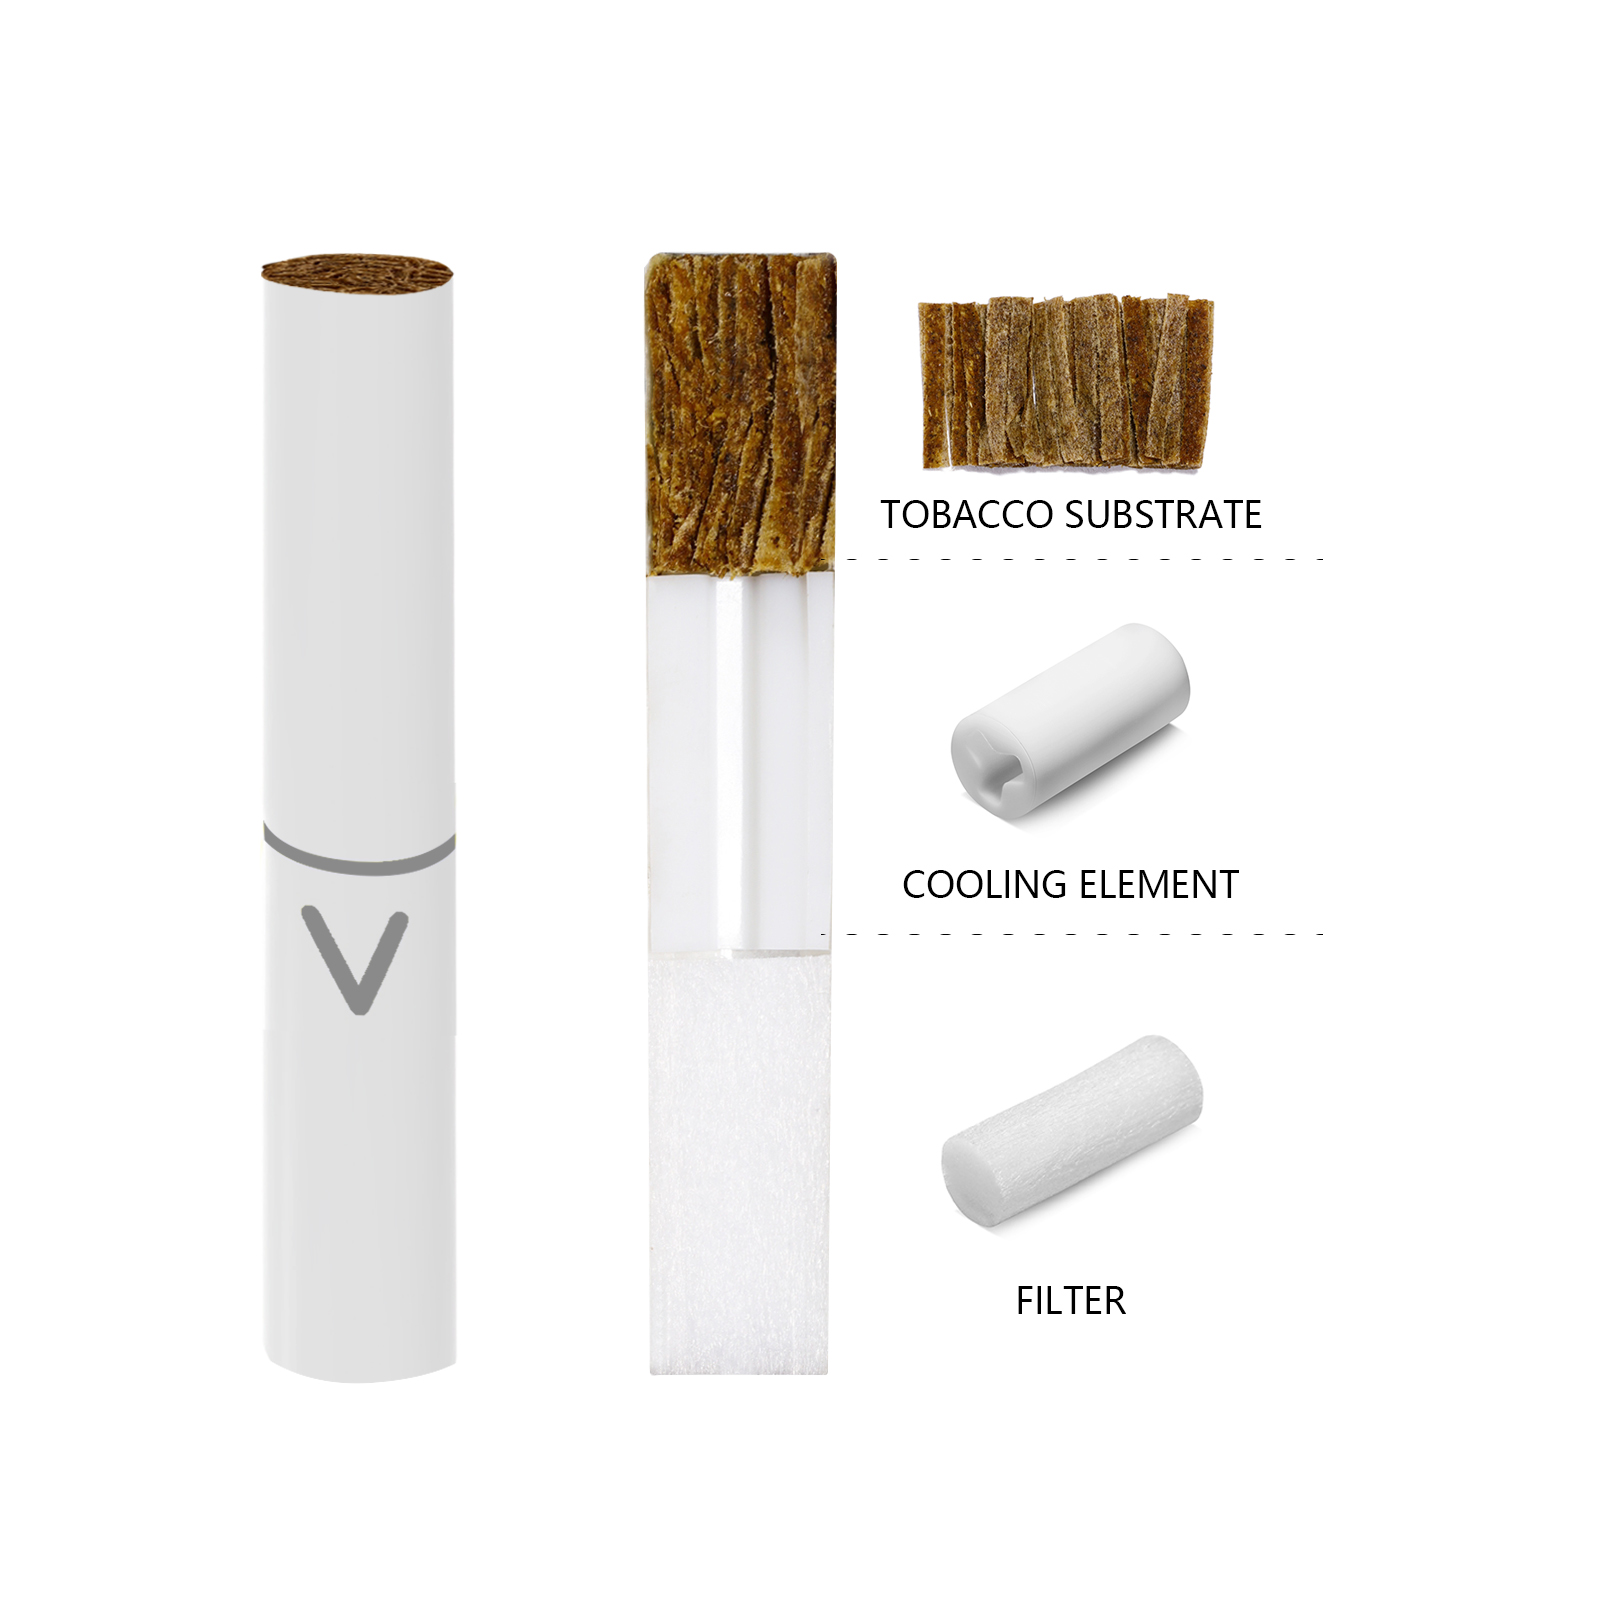 Tobacco Heat Not Burn Sticks Cigarett E Heating Heat Not Burn Device with Mojito Natural Flavor 